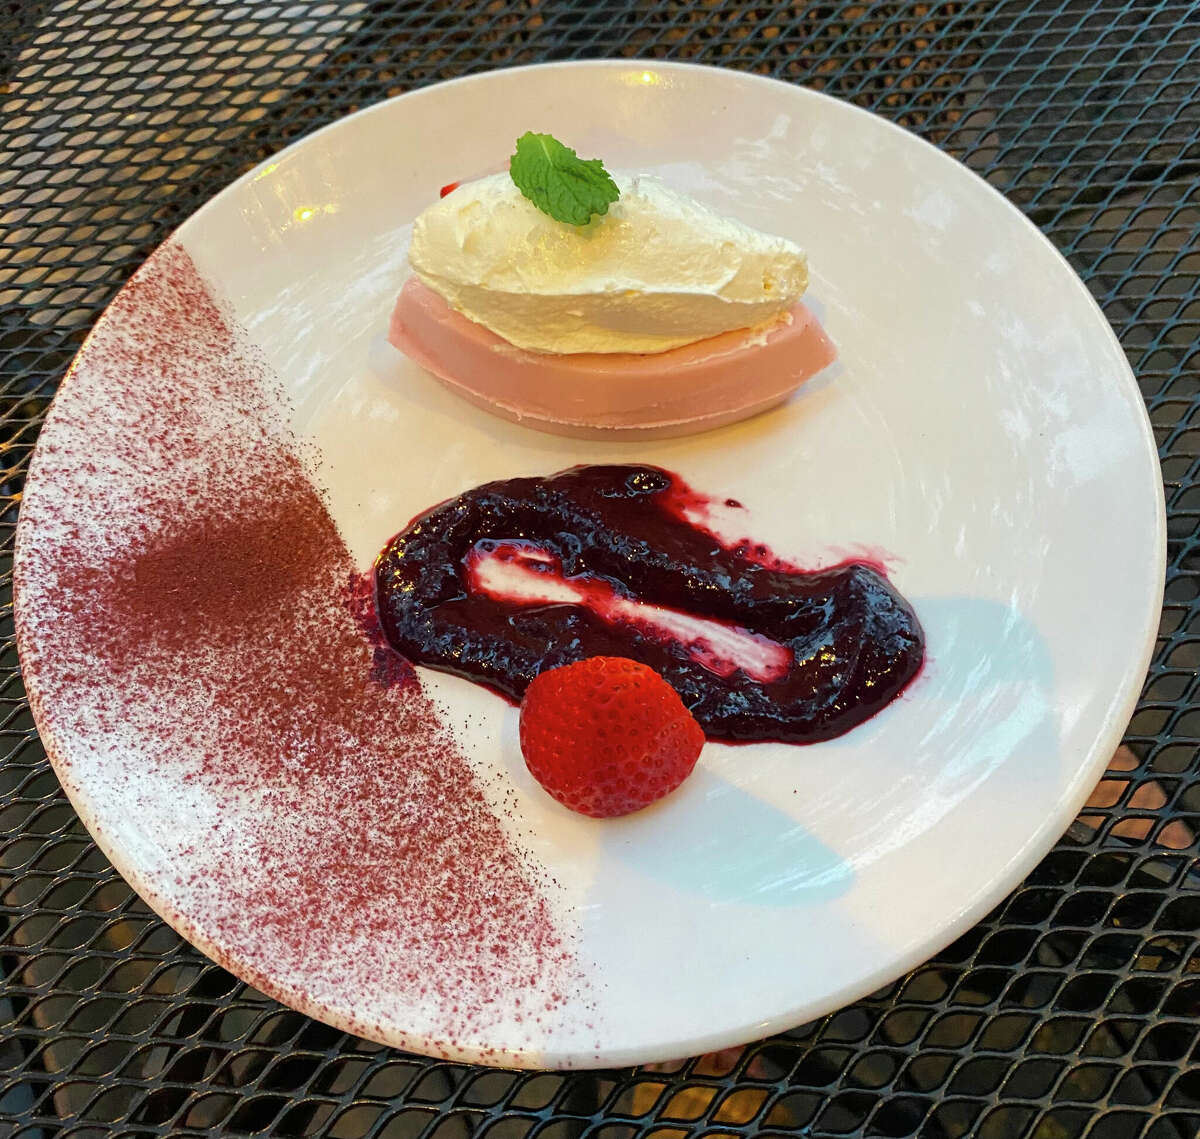 Strawberry panna cotta dessert at The Merc.